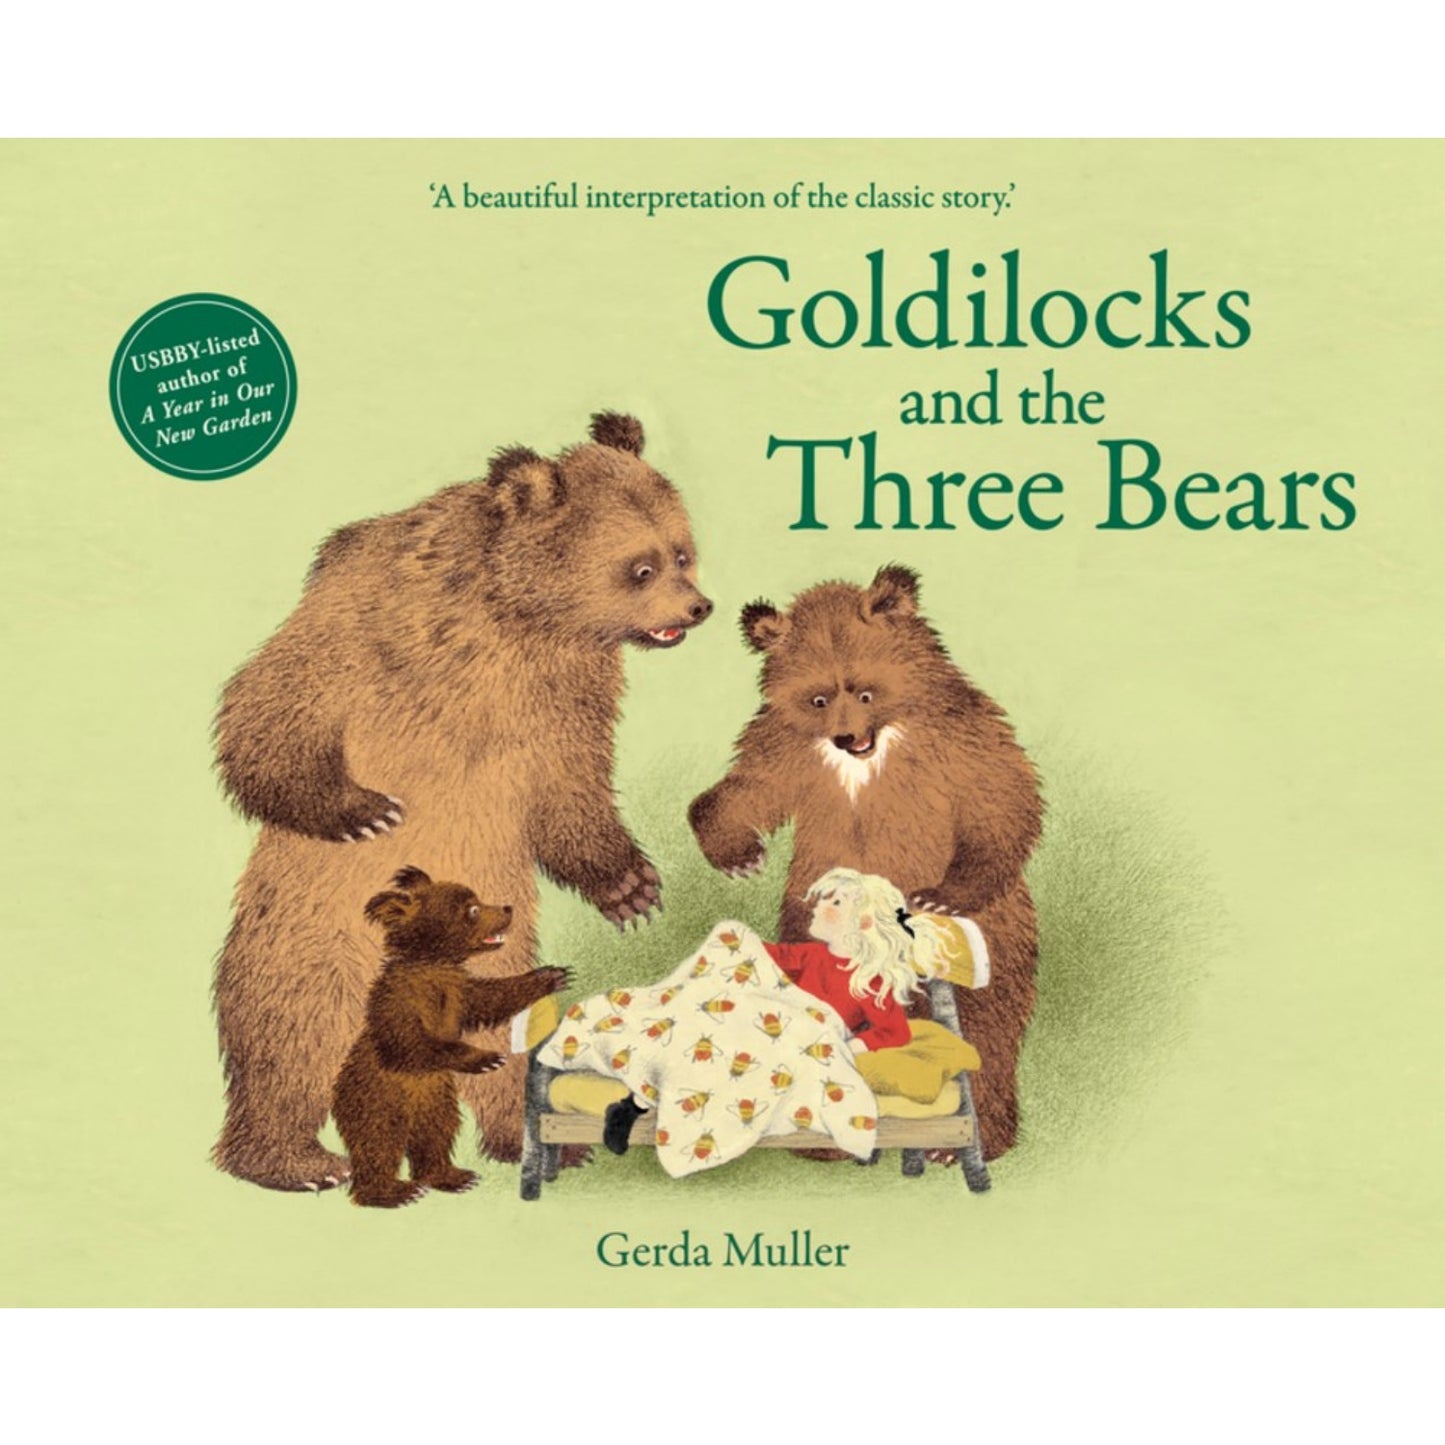 Goldilocks and the Three Bears | Gerda Muller | Hardcover | Tales & Myths for Children